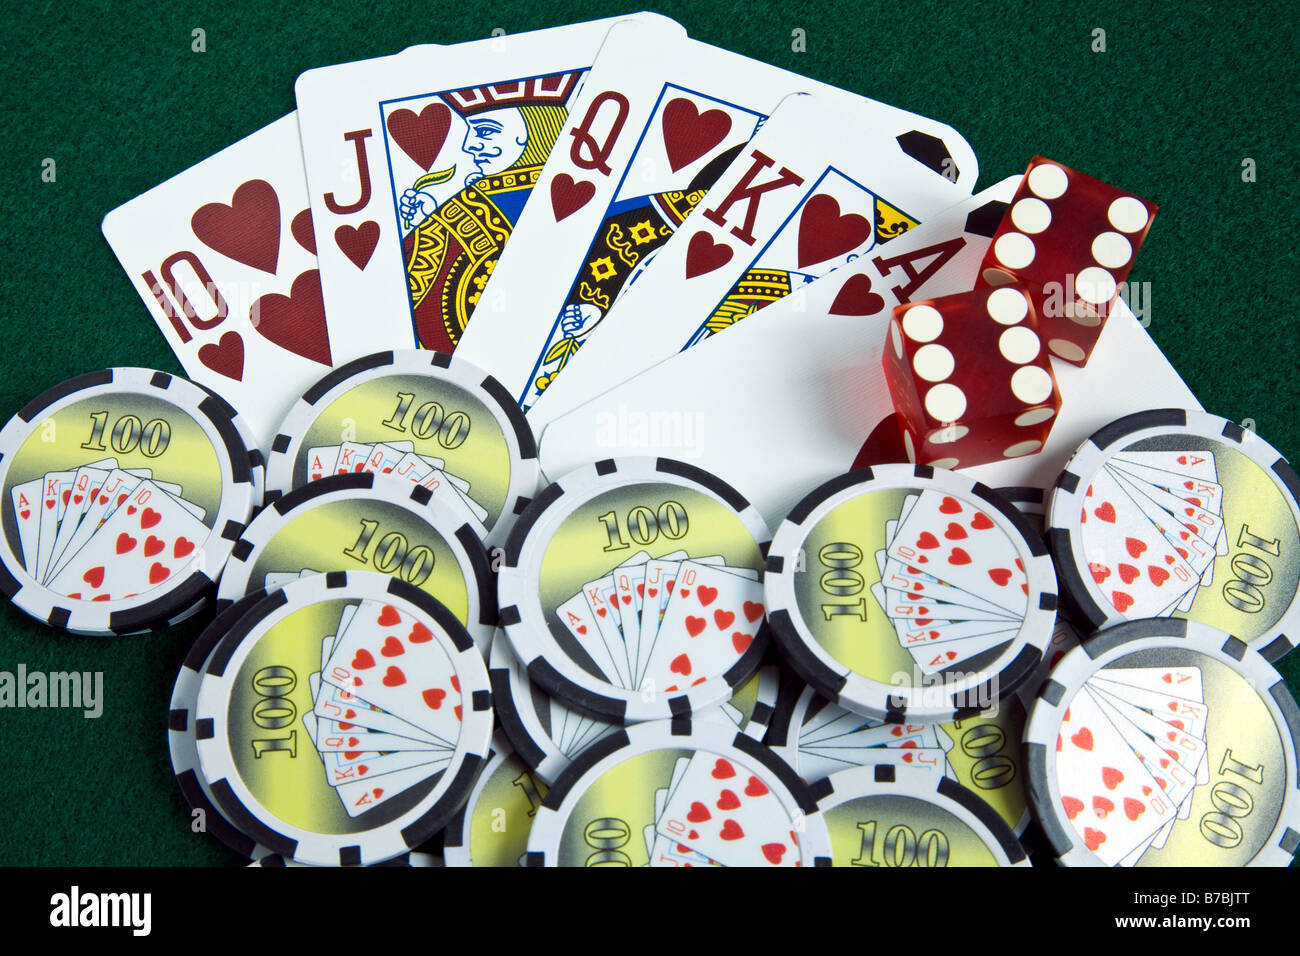 Poker All In Chip für Hotel Casino Las Vegas Texas Hold'em 